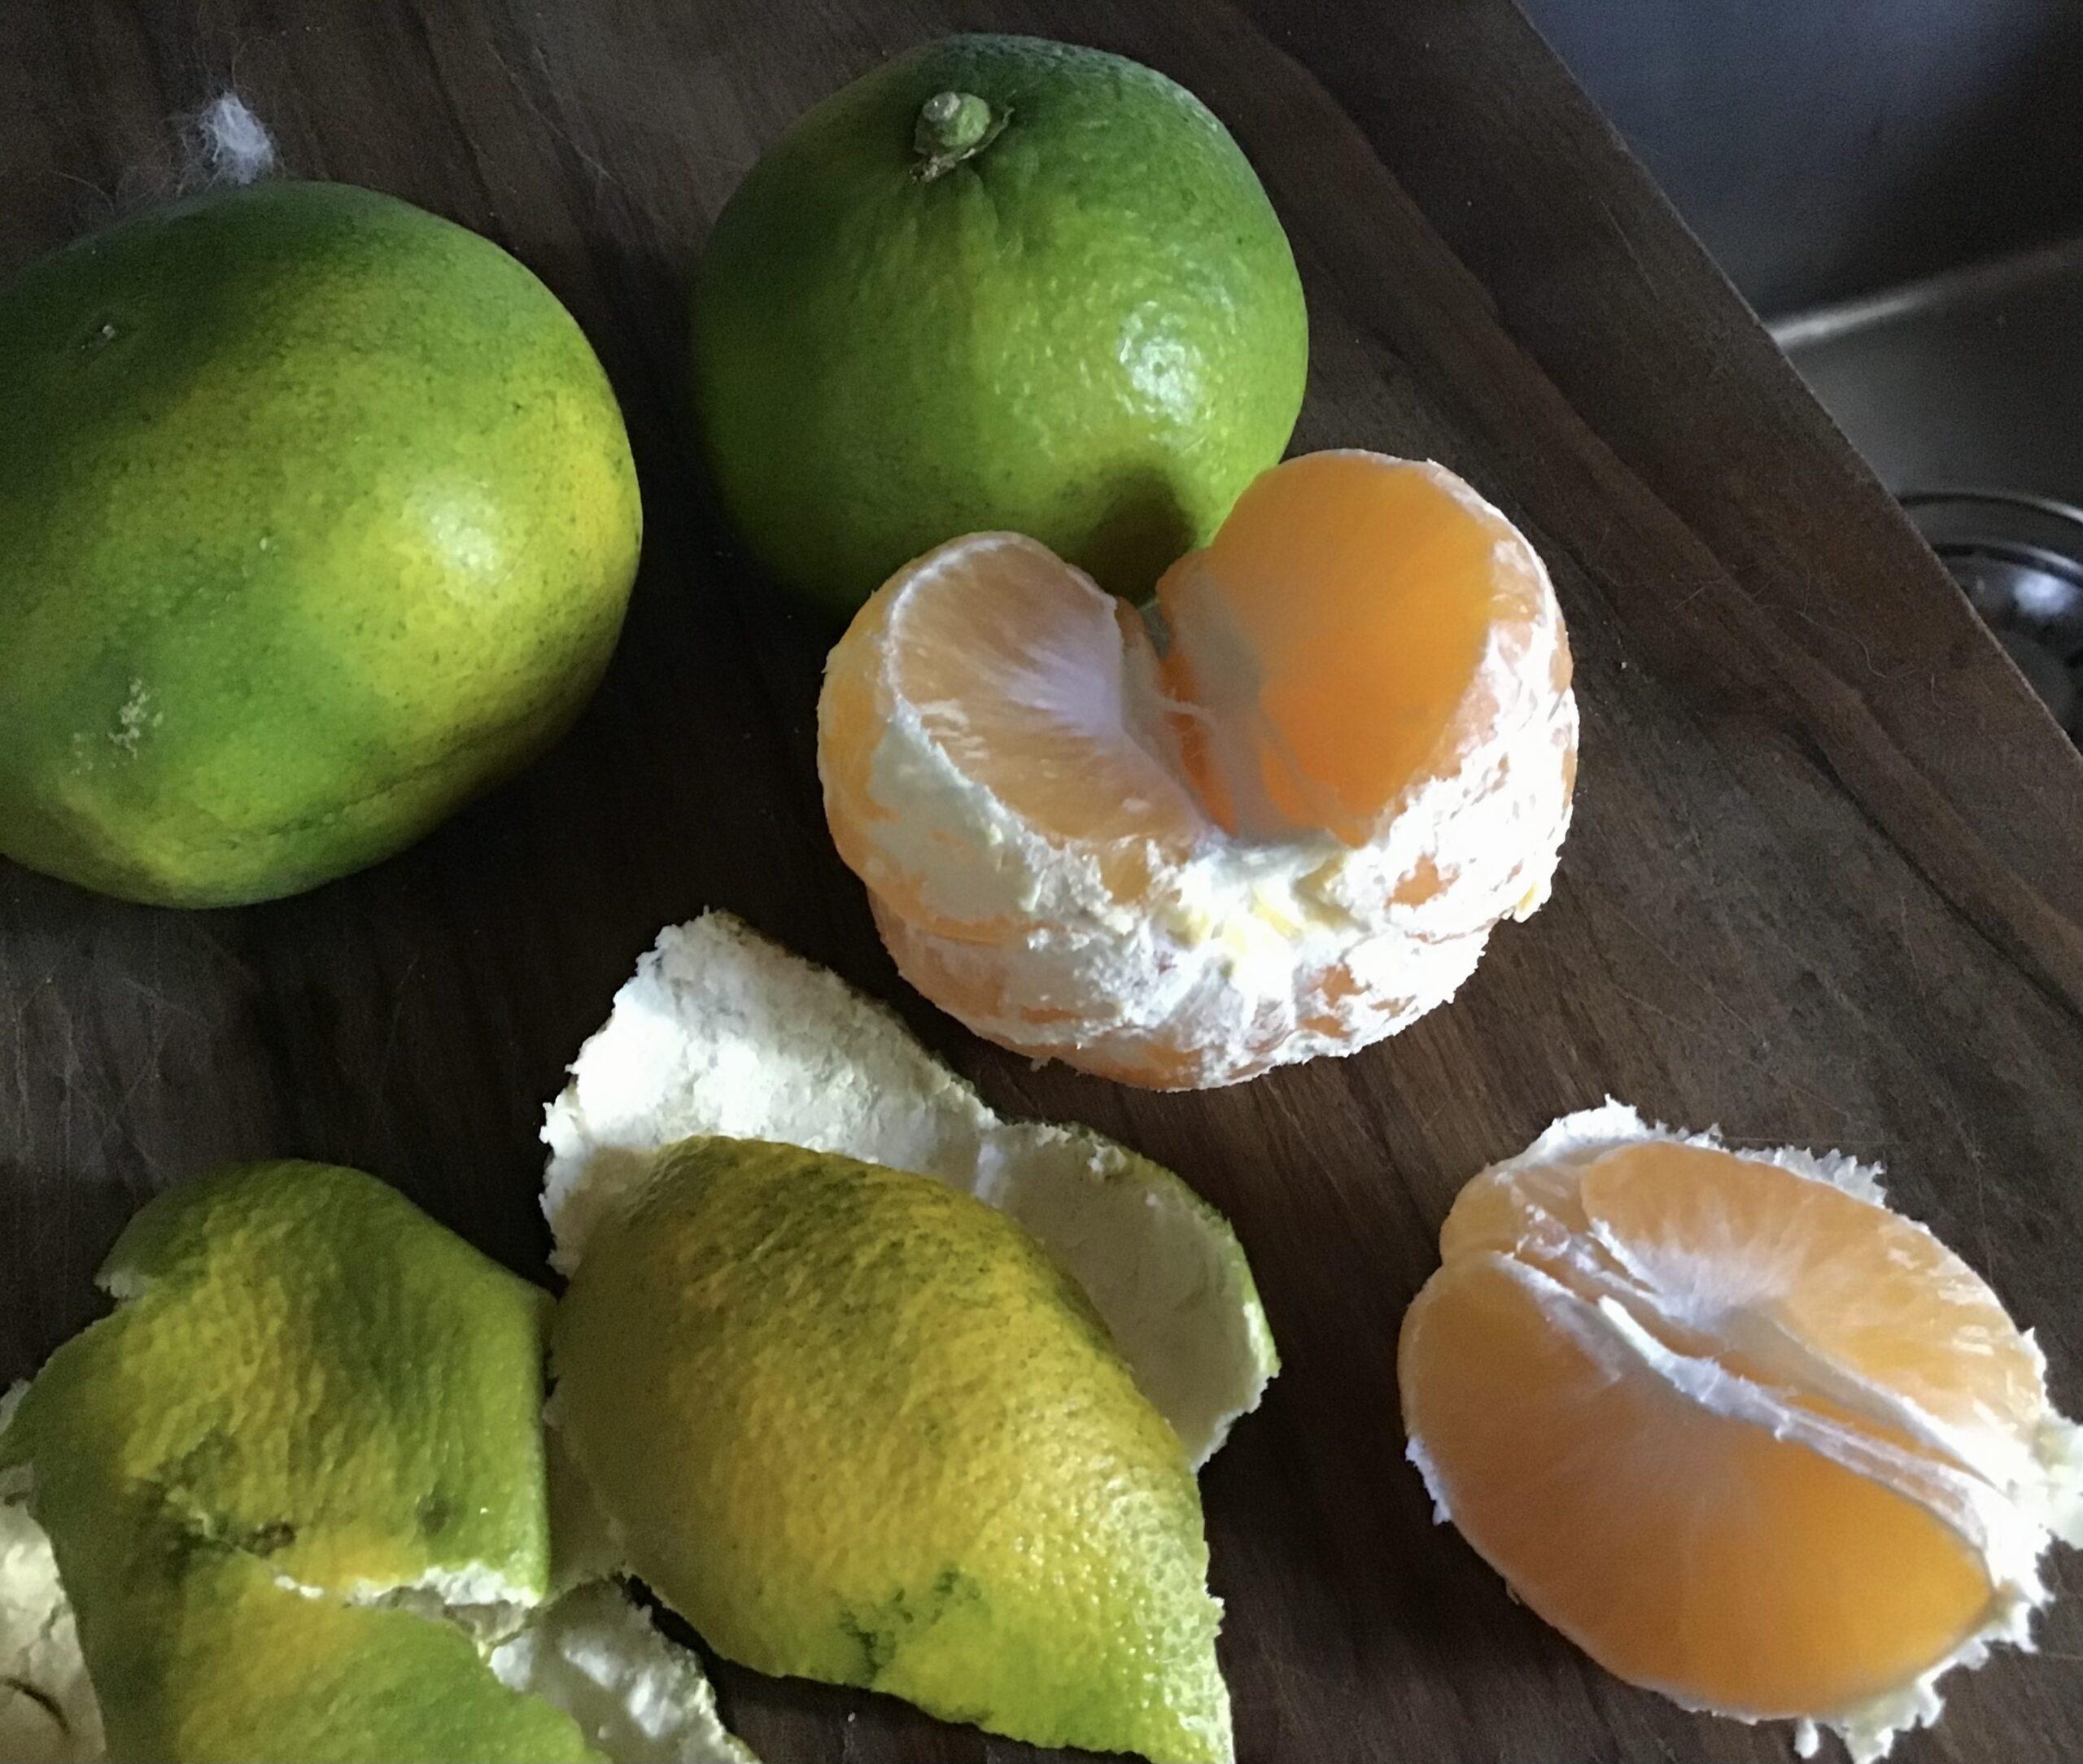 One whole and one peeled green mandarin orange, and one peeled and one unpeeled orange on a wooden table.